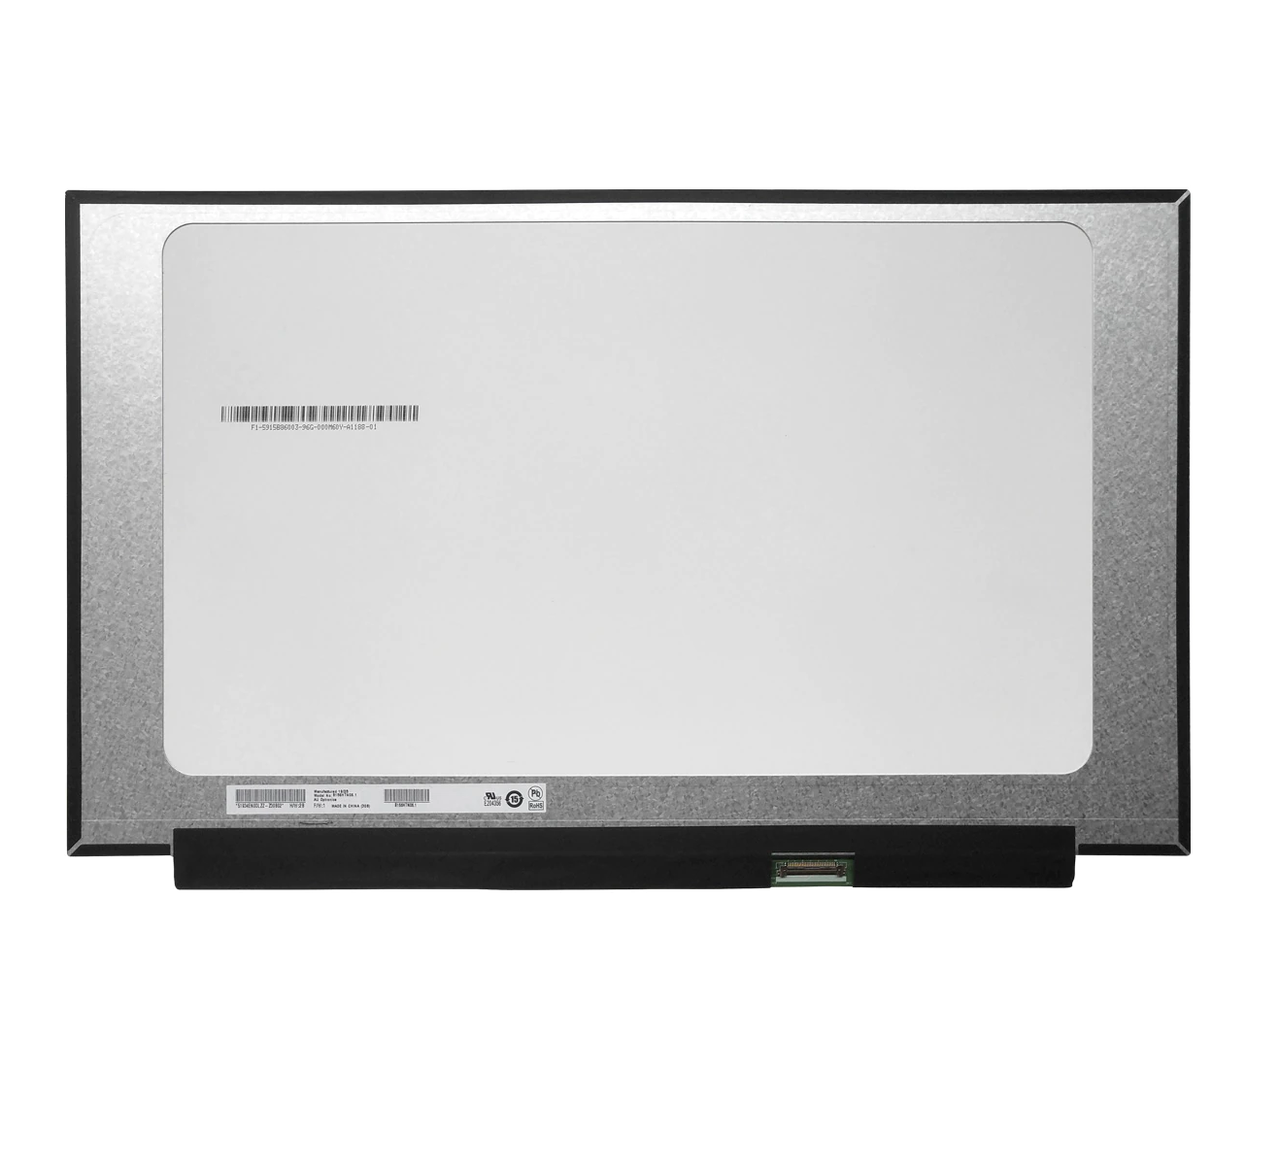 Матрица (экран) для ноутбука Sharp LQ156M1JW16, 15,6 40 eDp Slim, 1920x1080, IPS, 240Hz